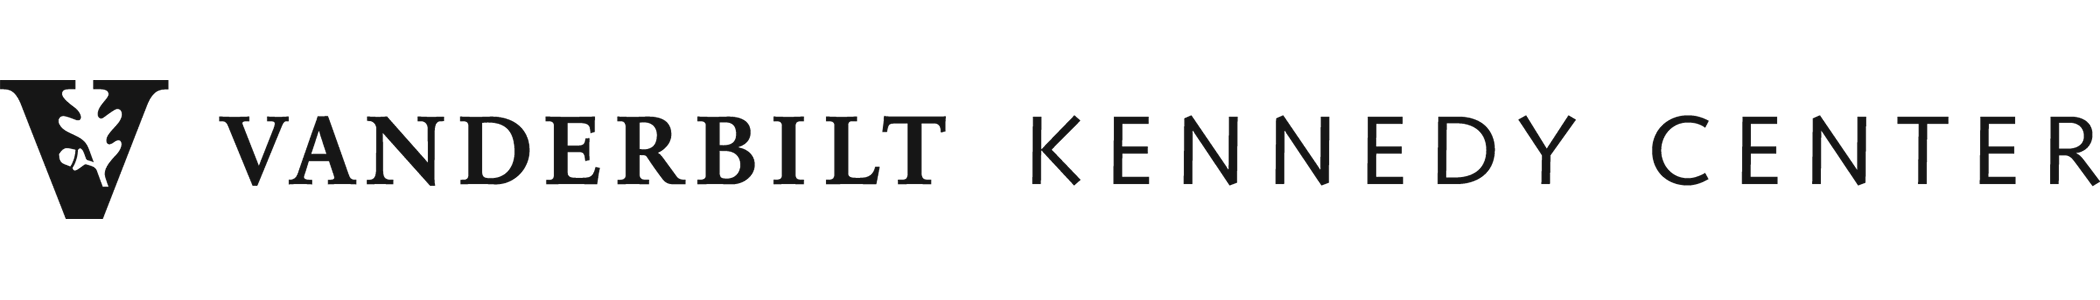 Vanderbilt Kennedy Center Logo